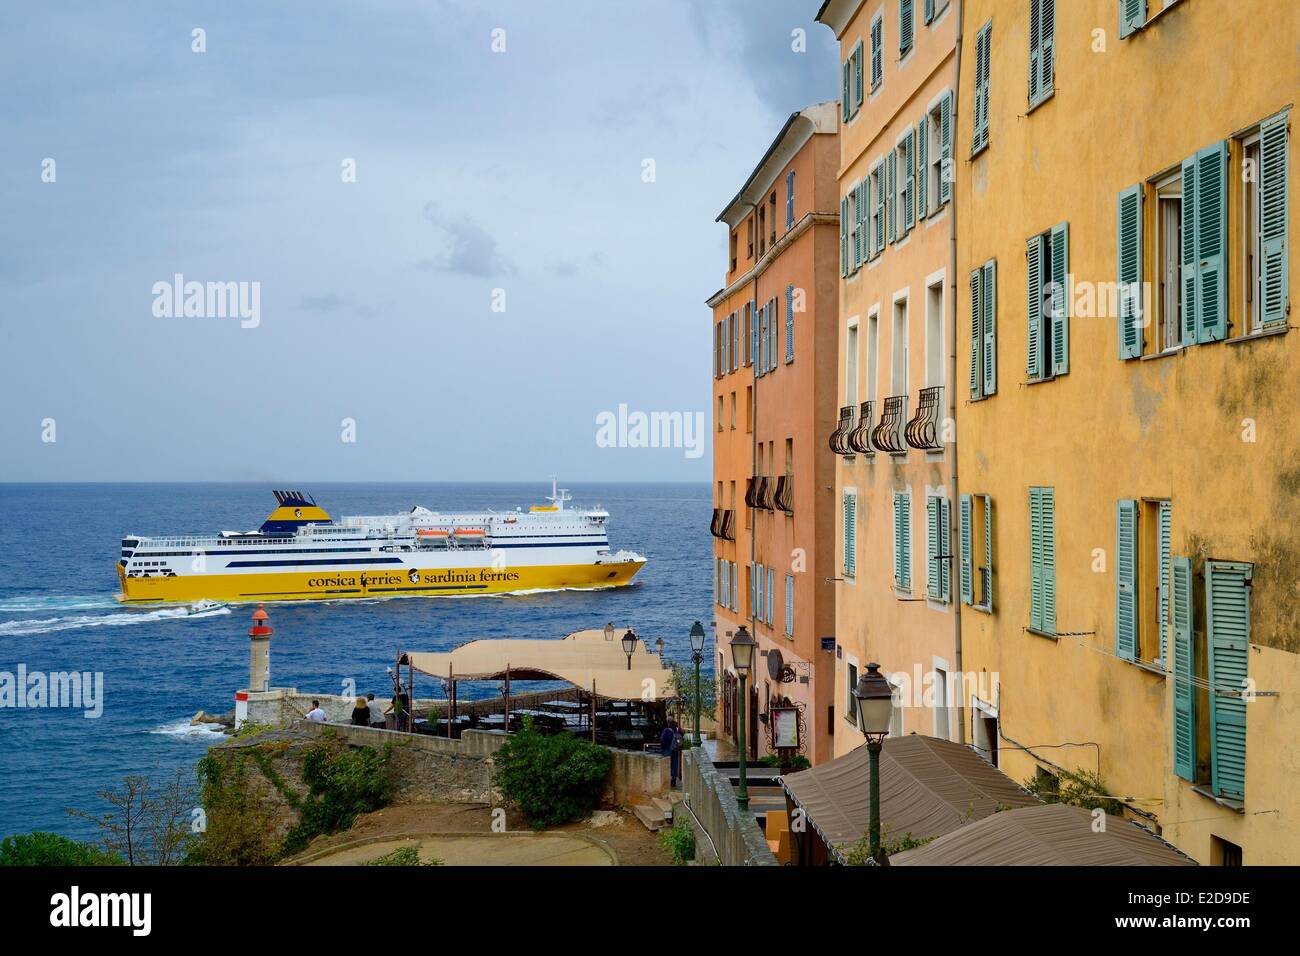 France, Haute Corse, Bastia, the Citadel district of Terra Nova, Corsica Ferries ferry leaving the city Stock Photo